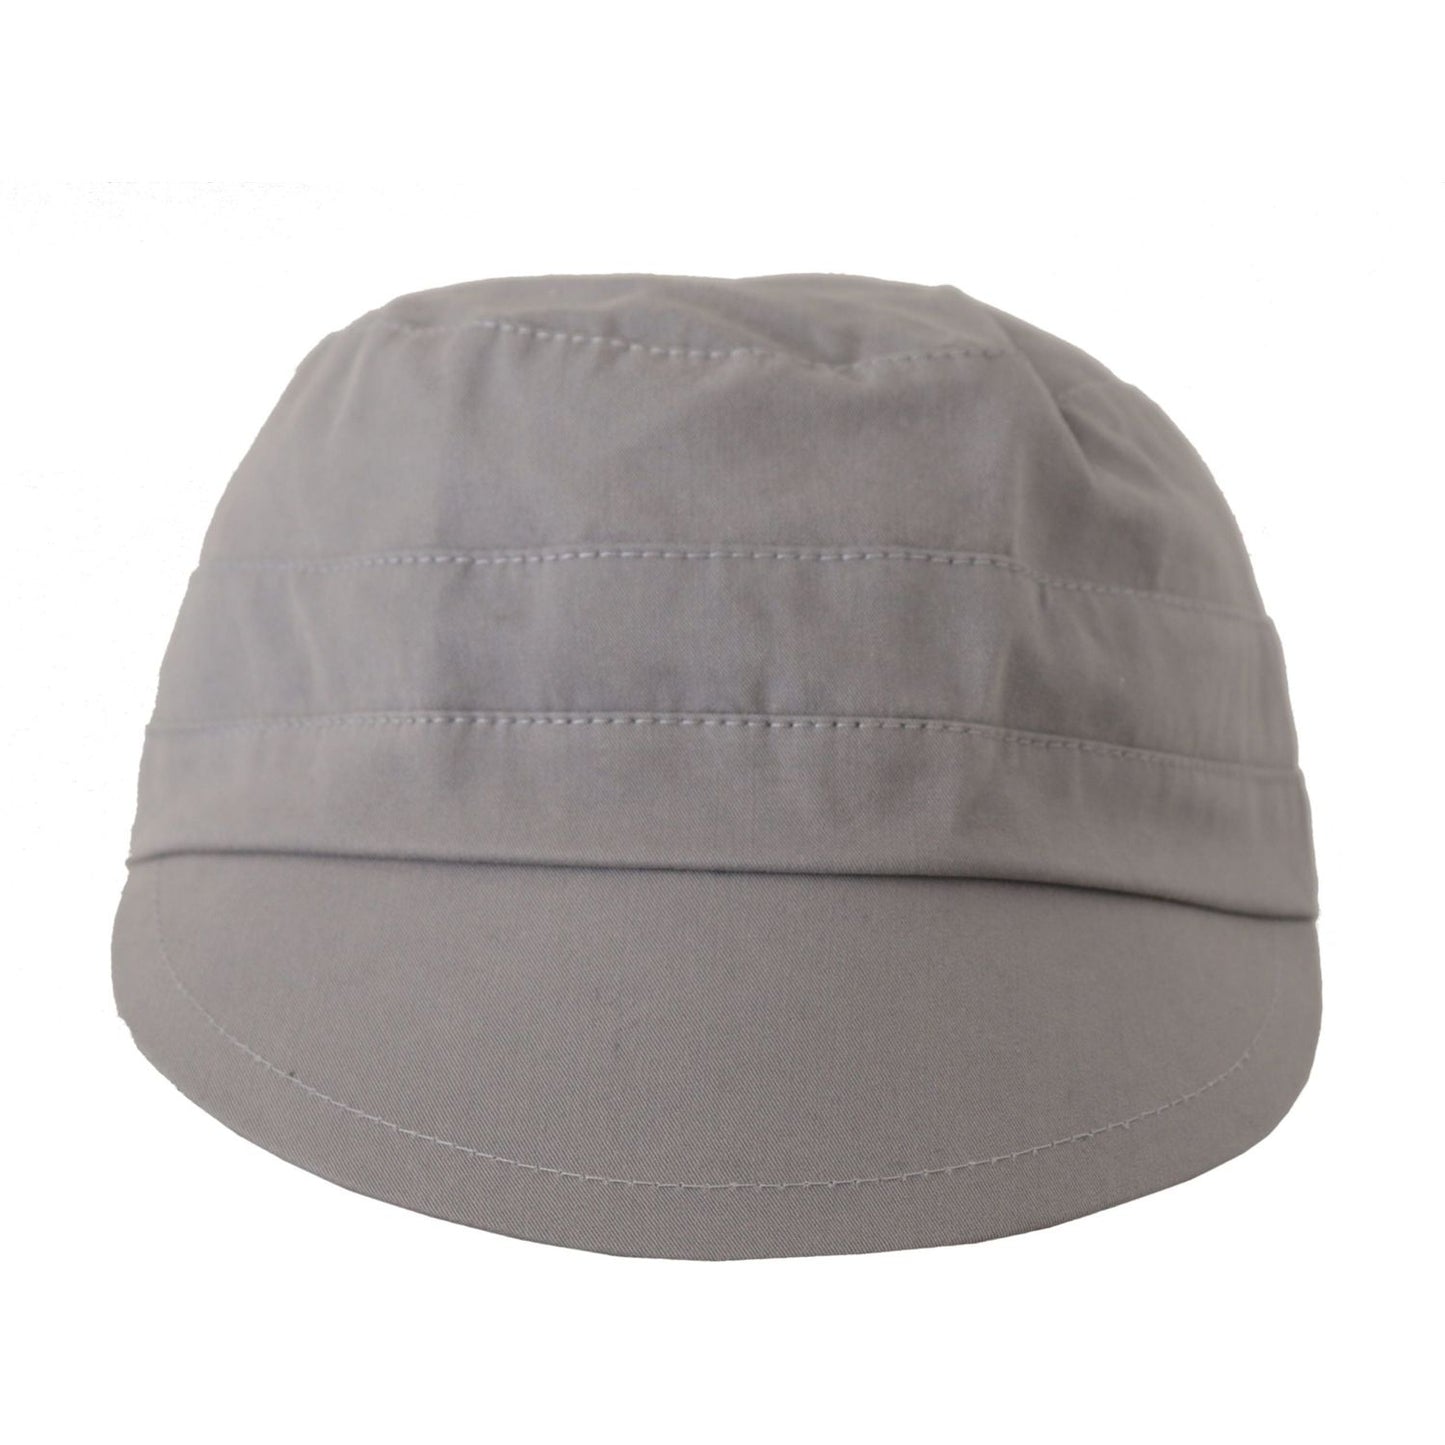 Dolce & Gabbana Elegant Gray Newsboy Cap - Classic Accessory gray-newsboy-cap-men-capello-cotton-hat IMG_8049-scaled-7b8a5aa8-208.jpg